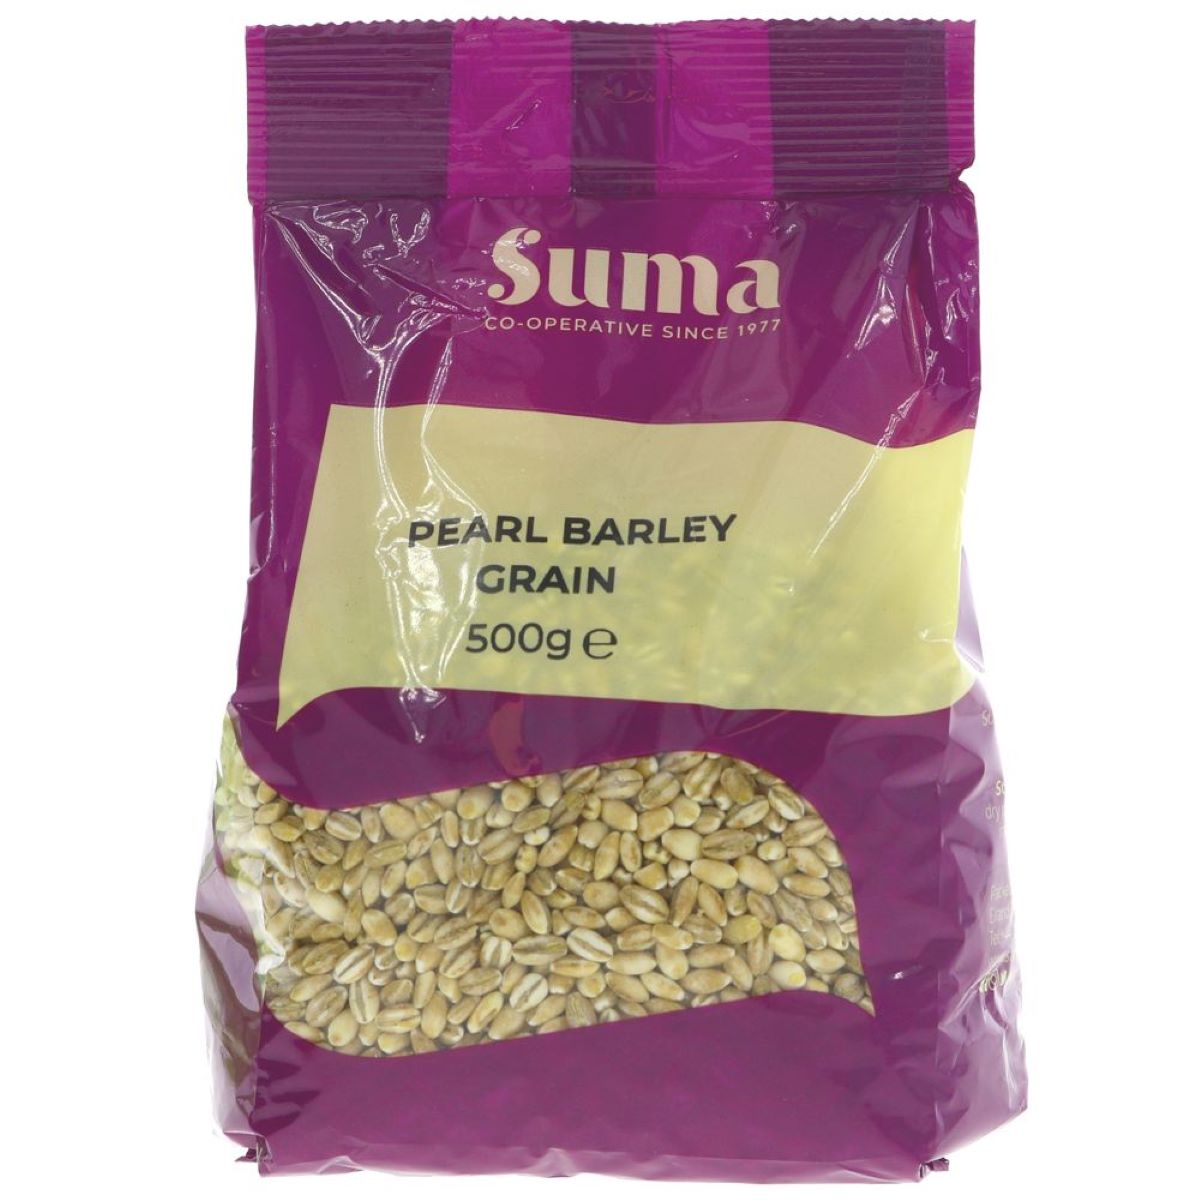 Suma Pearl Barley Grain 500g